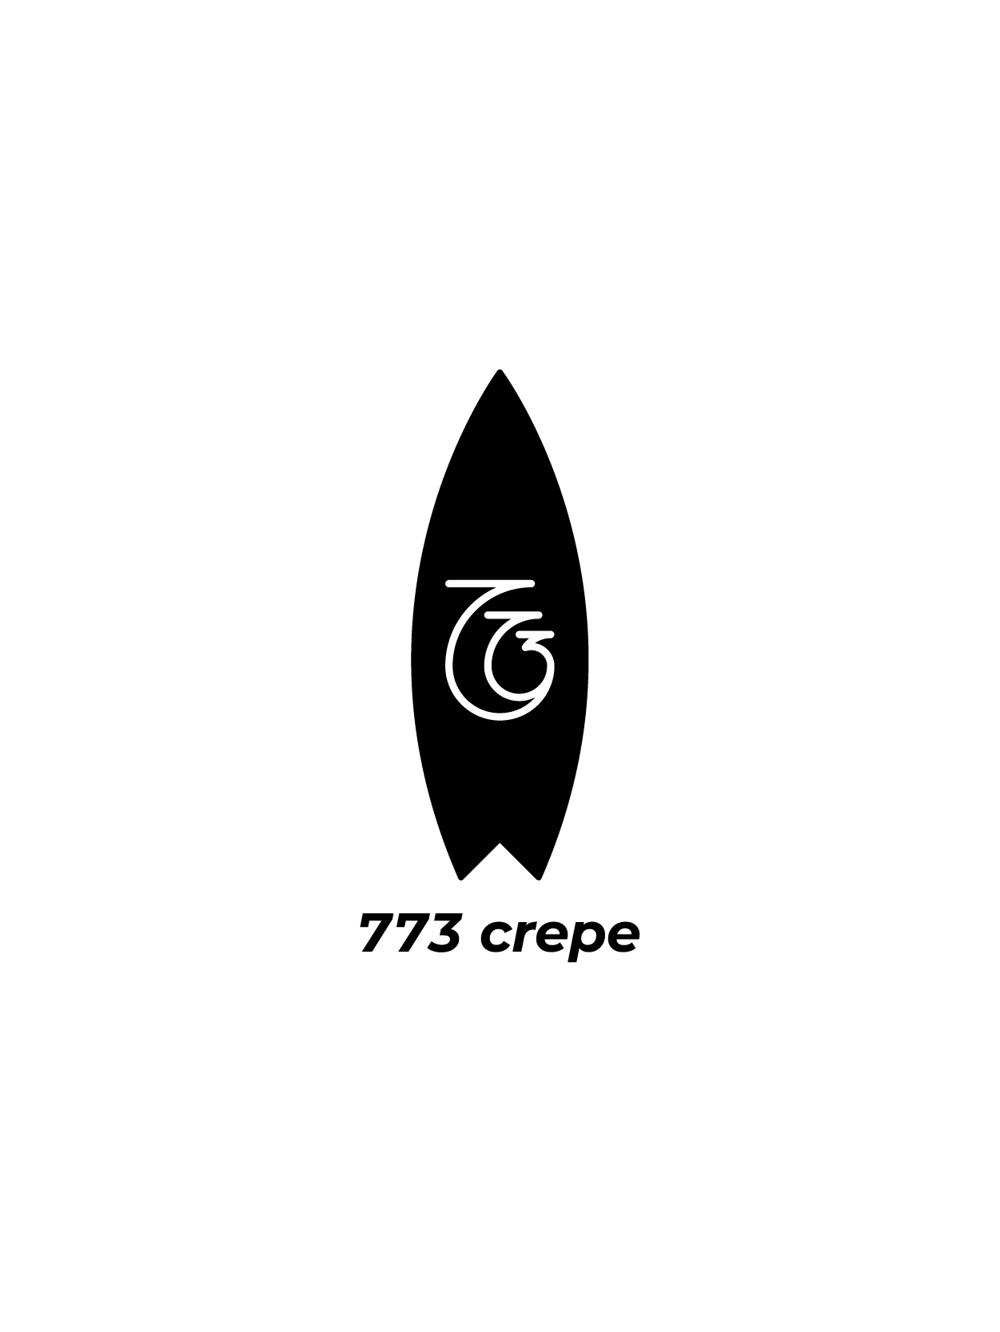 773 crepe